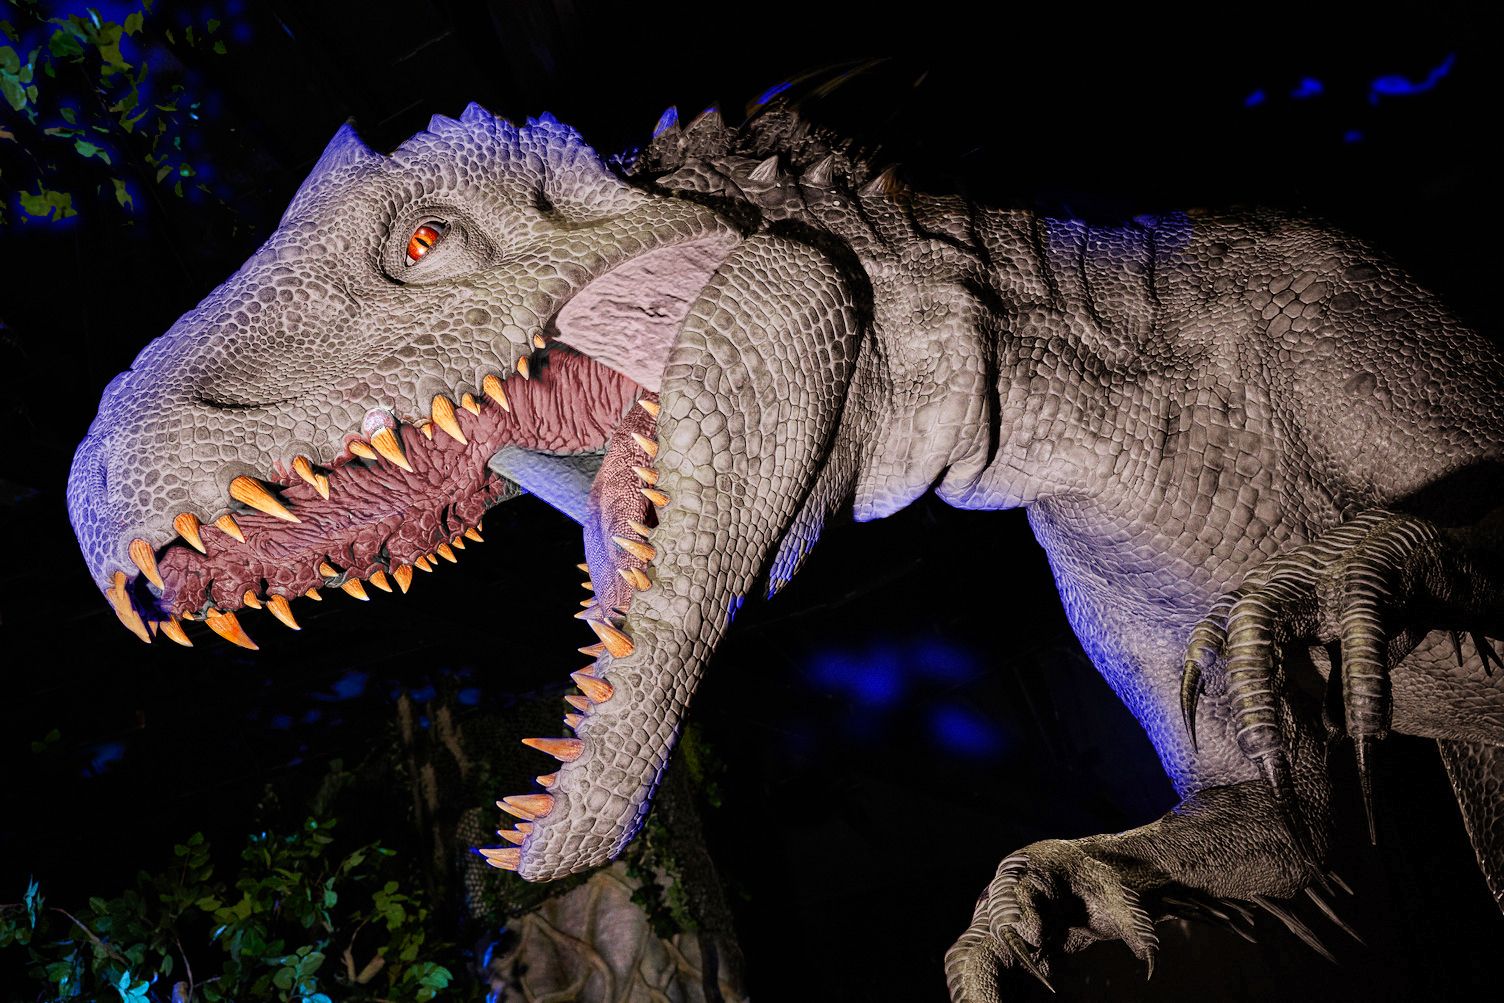 Jurassic World -The Ride at Universal Studios Hollywood